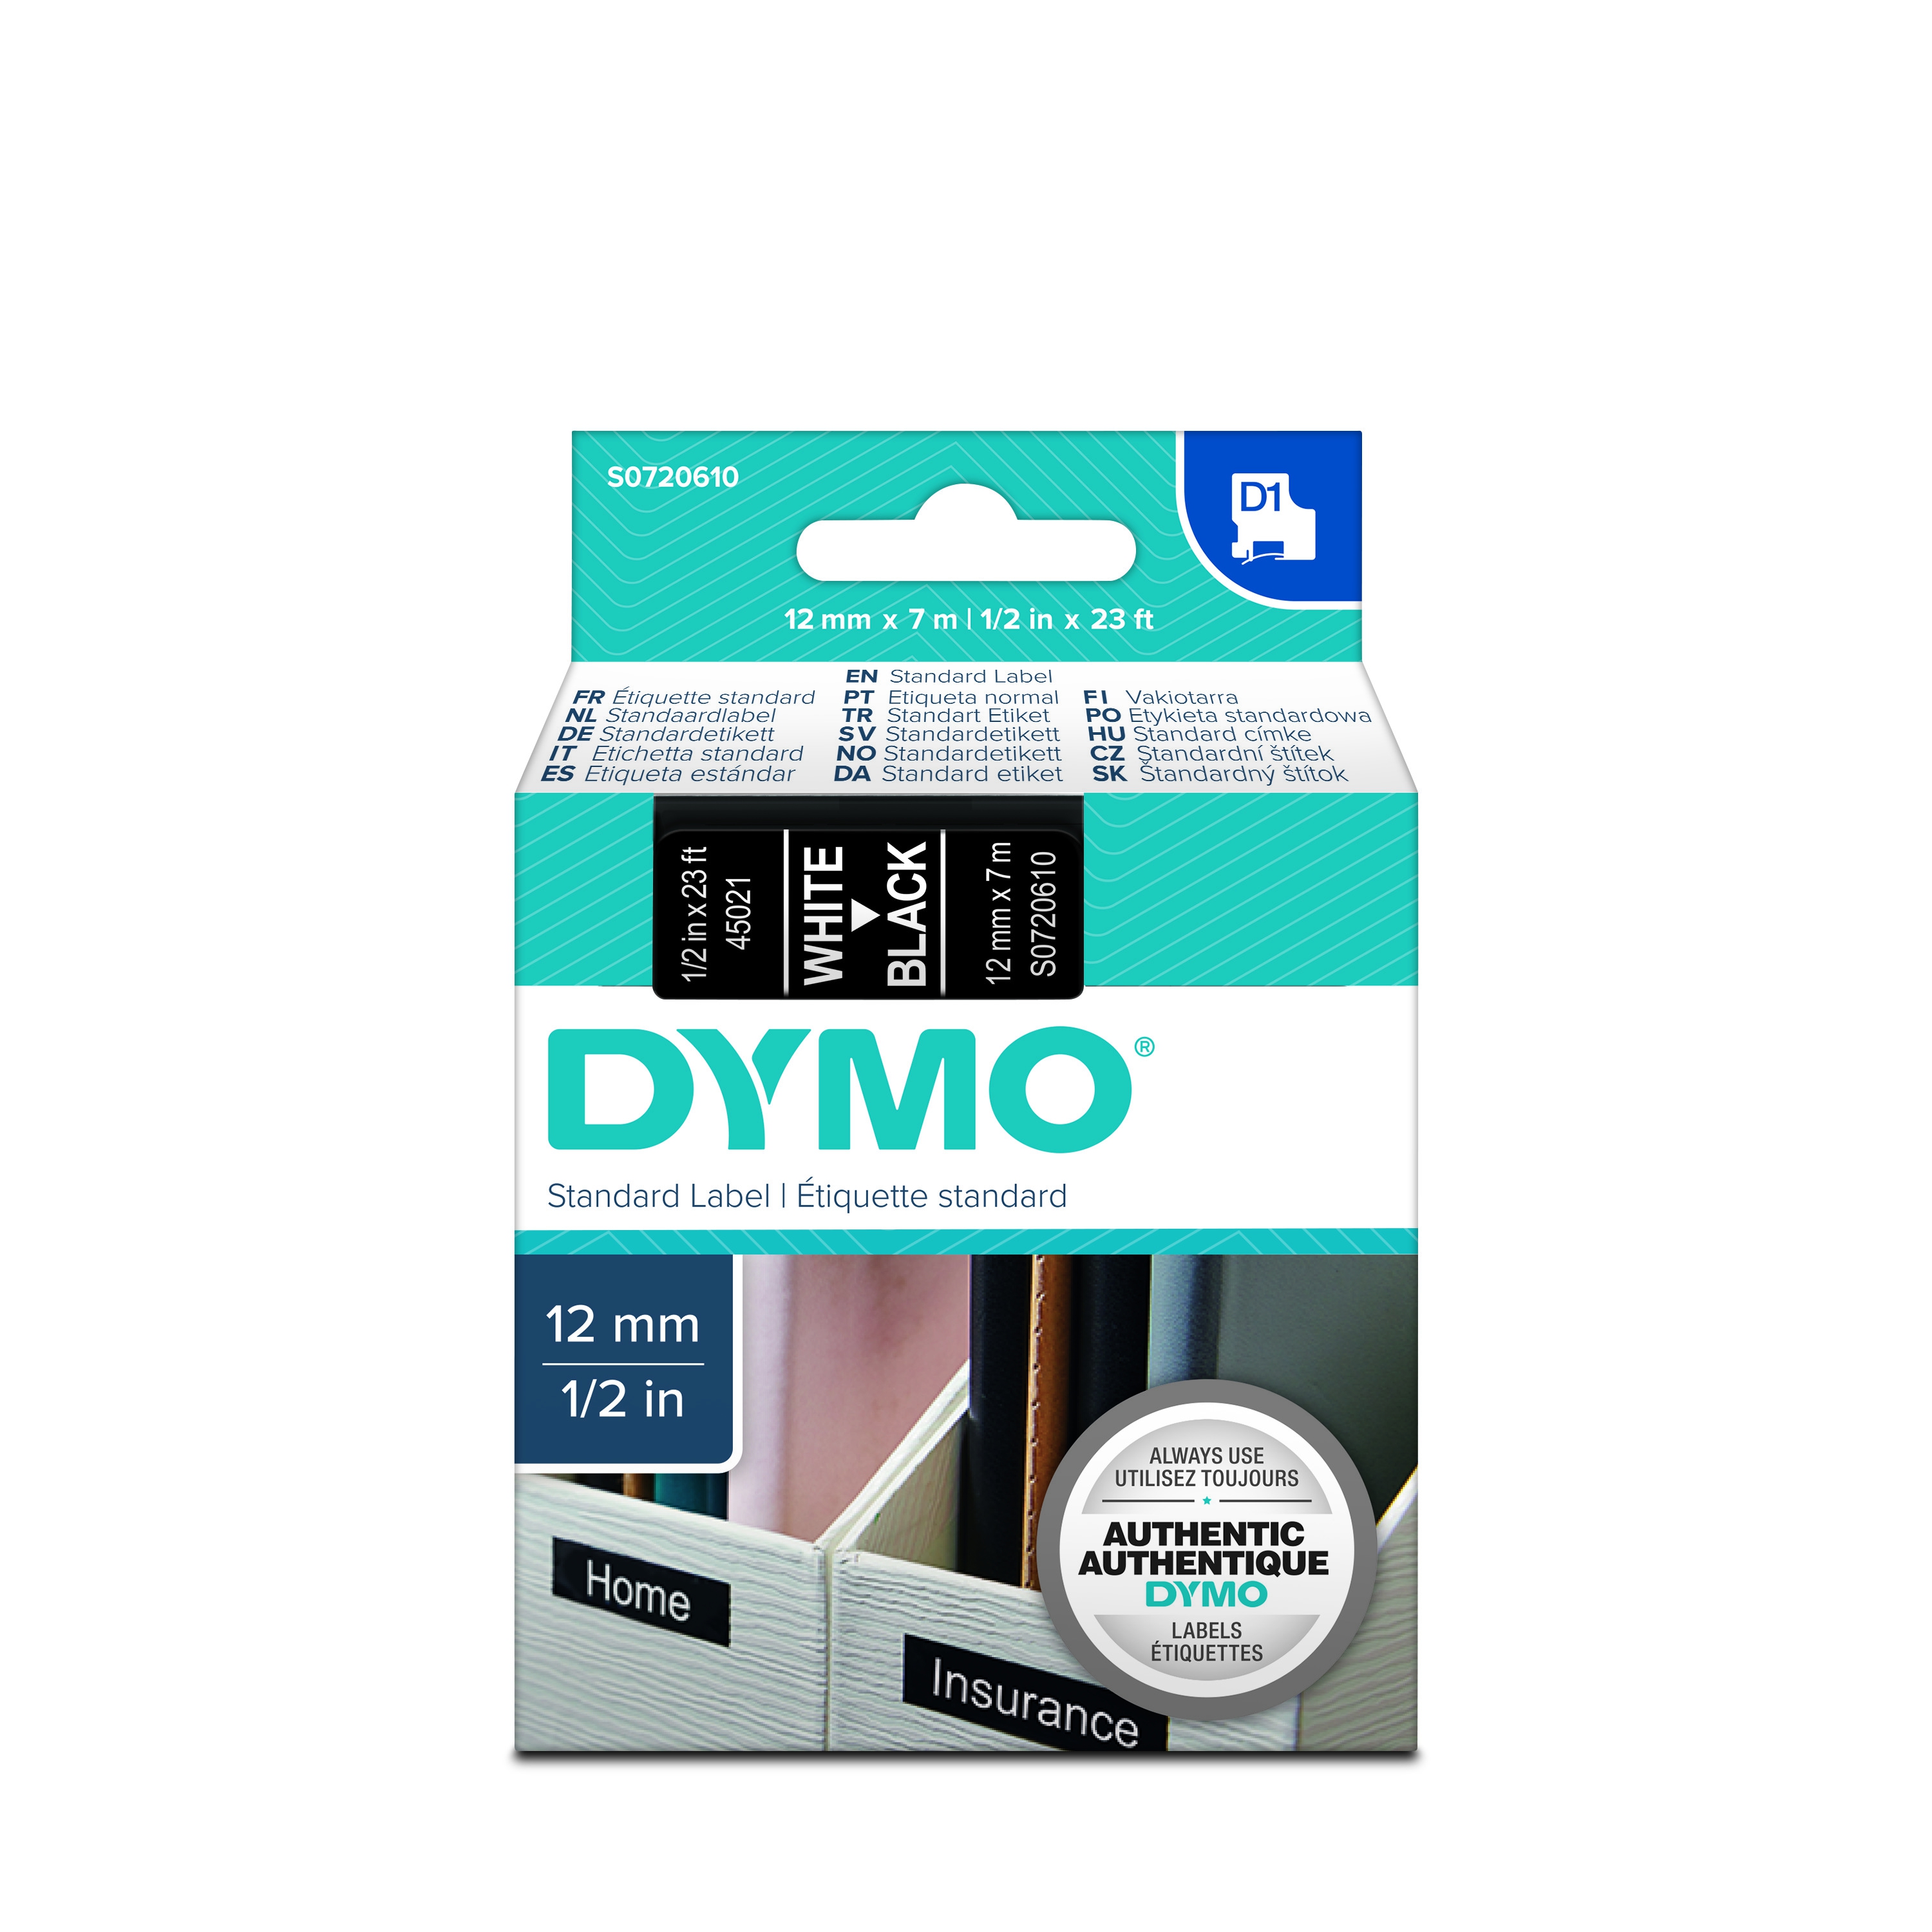 Dymo 45021 D1 Tape 12mm x 7m wit op zwart 